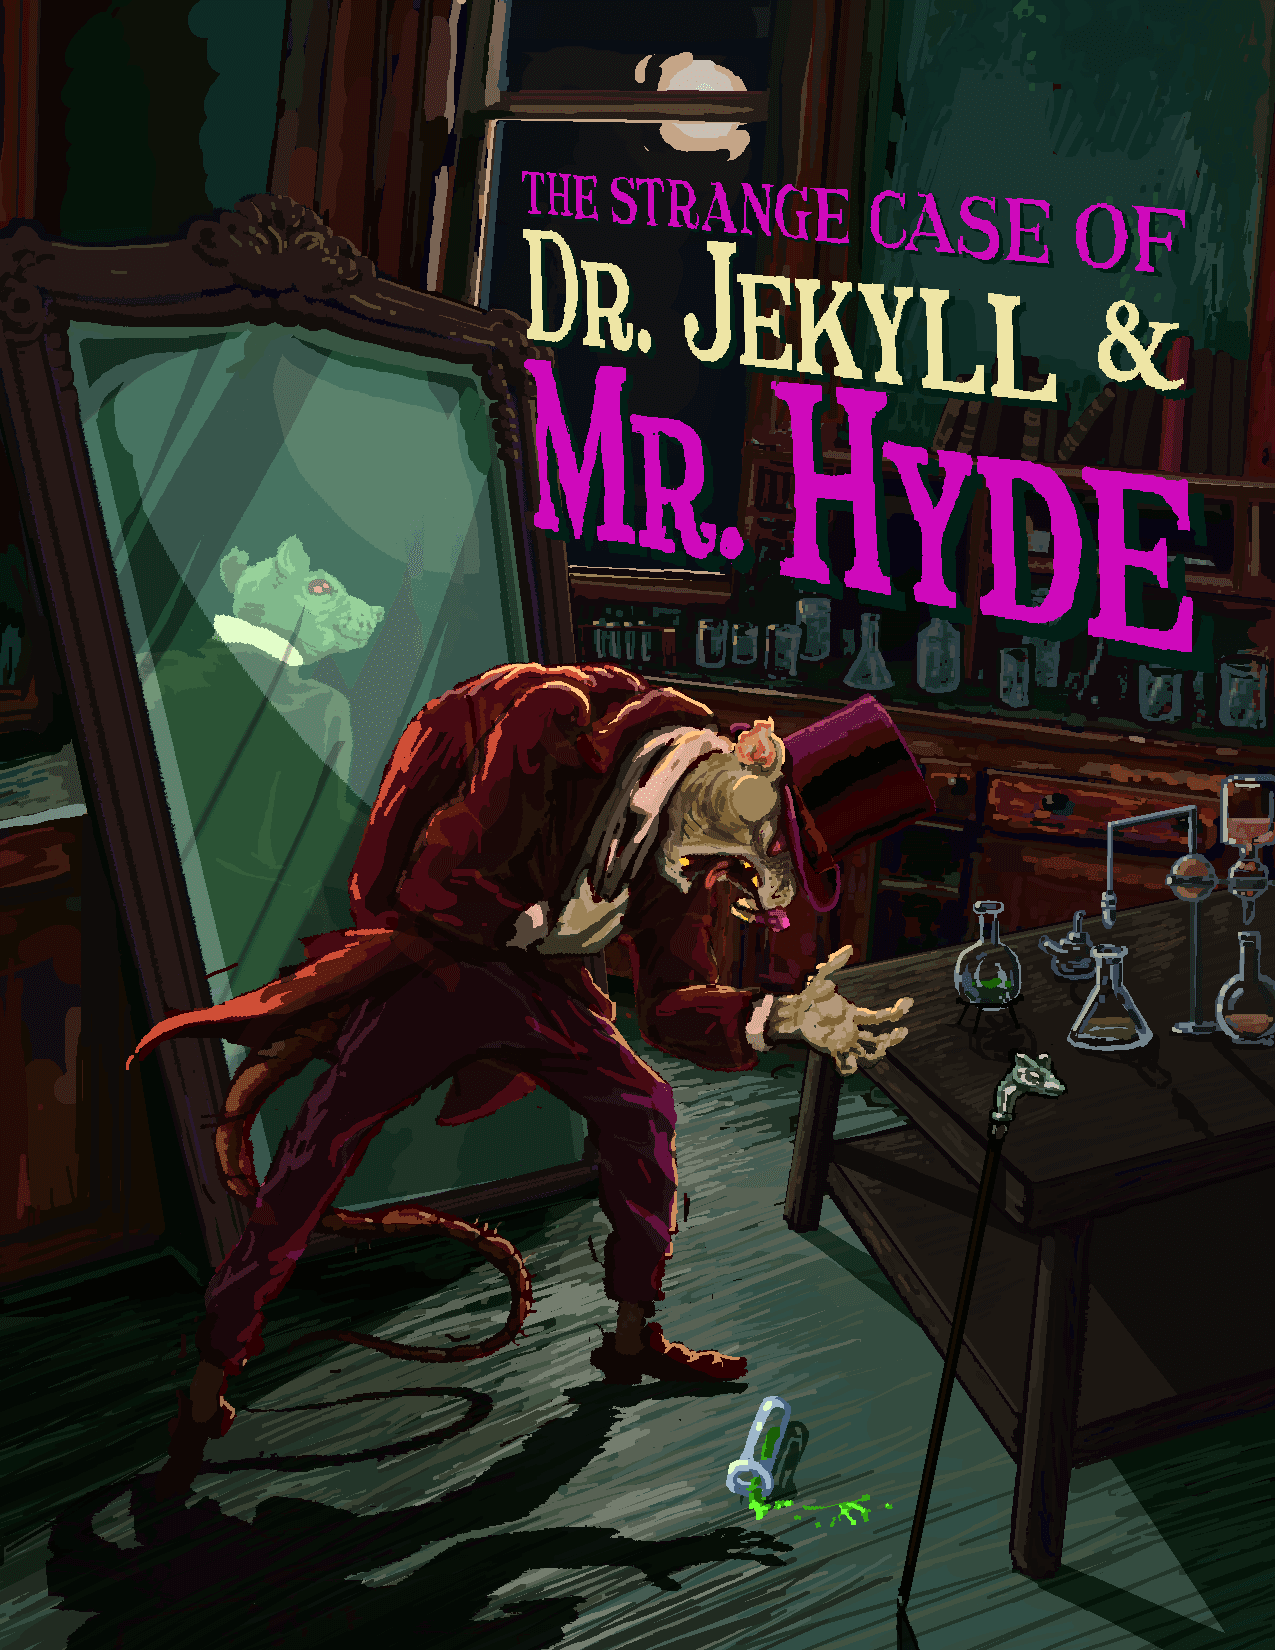 Mr. Hyde #3